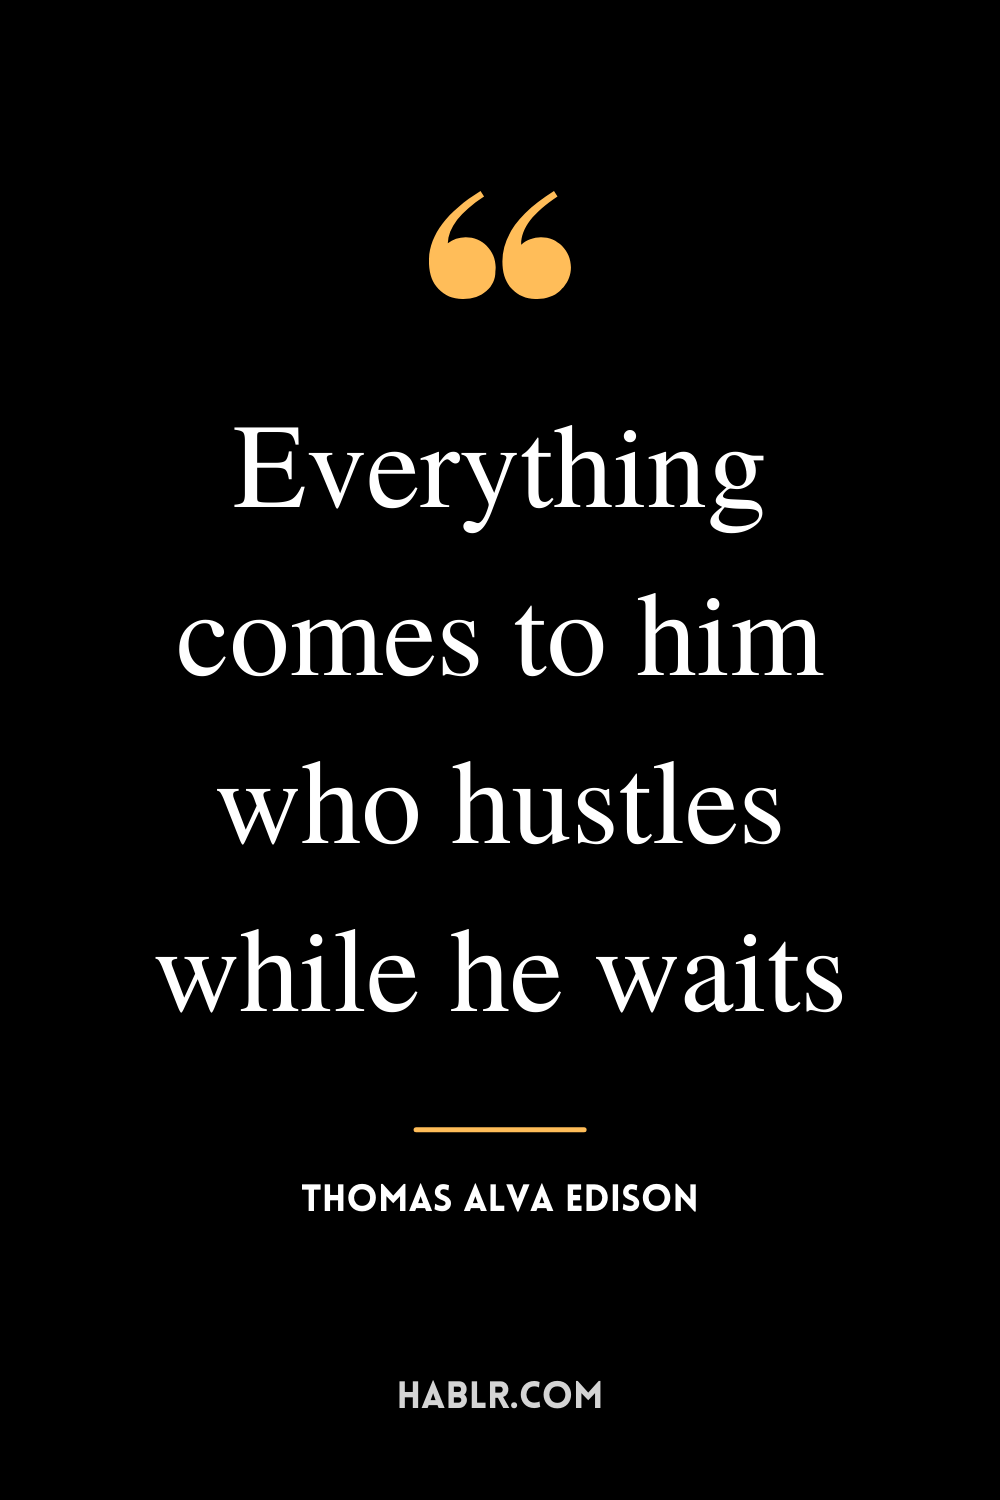 "Everything comes to him who hustles while he waits." -Thomas Alva Edison